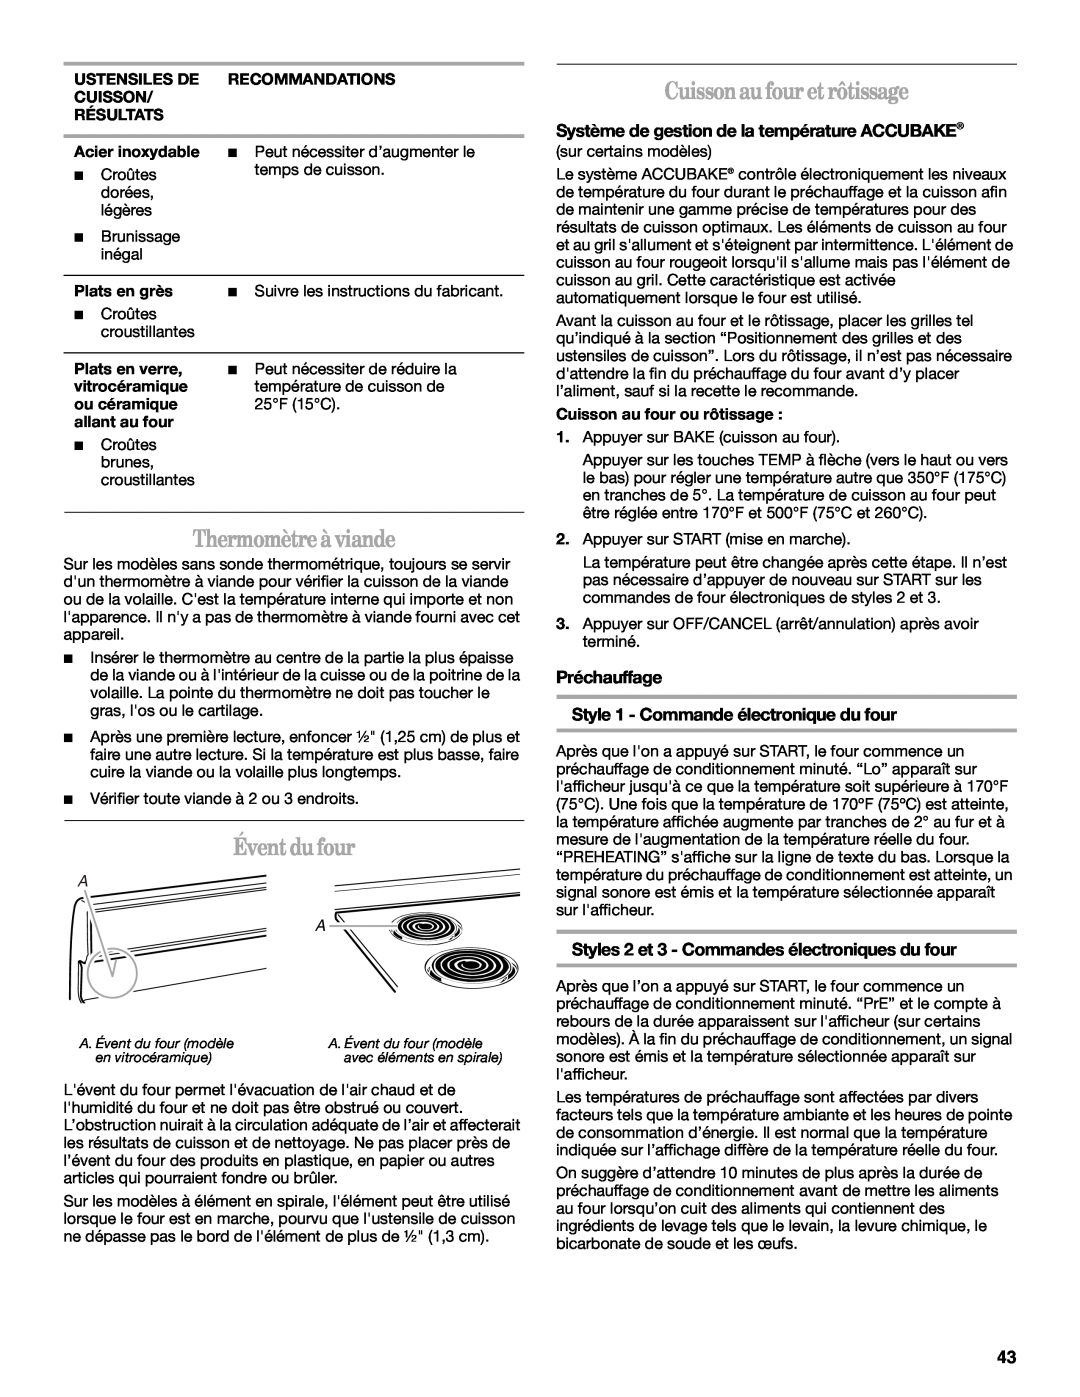 Whirlpool GERC4110PB0 manual Thermomètreà viande, Éventdu four, Cuissonau fouretrôtissage 